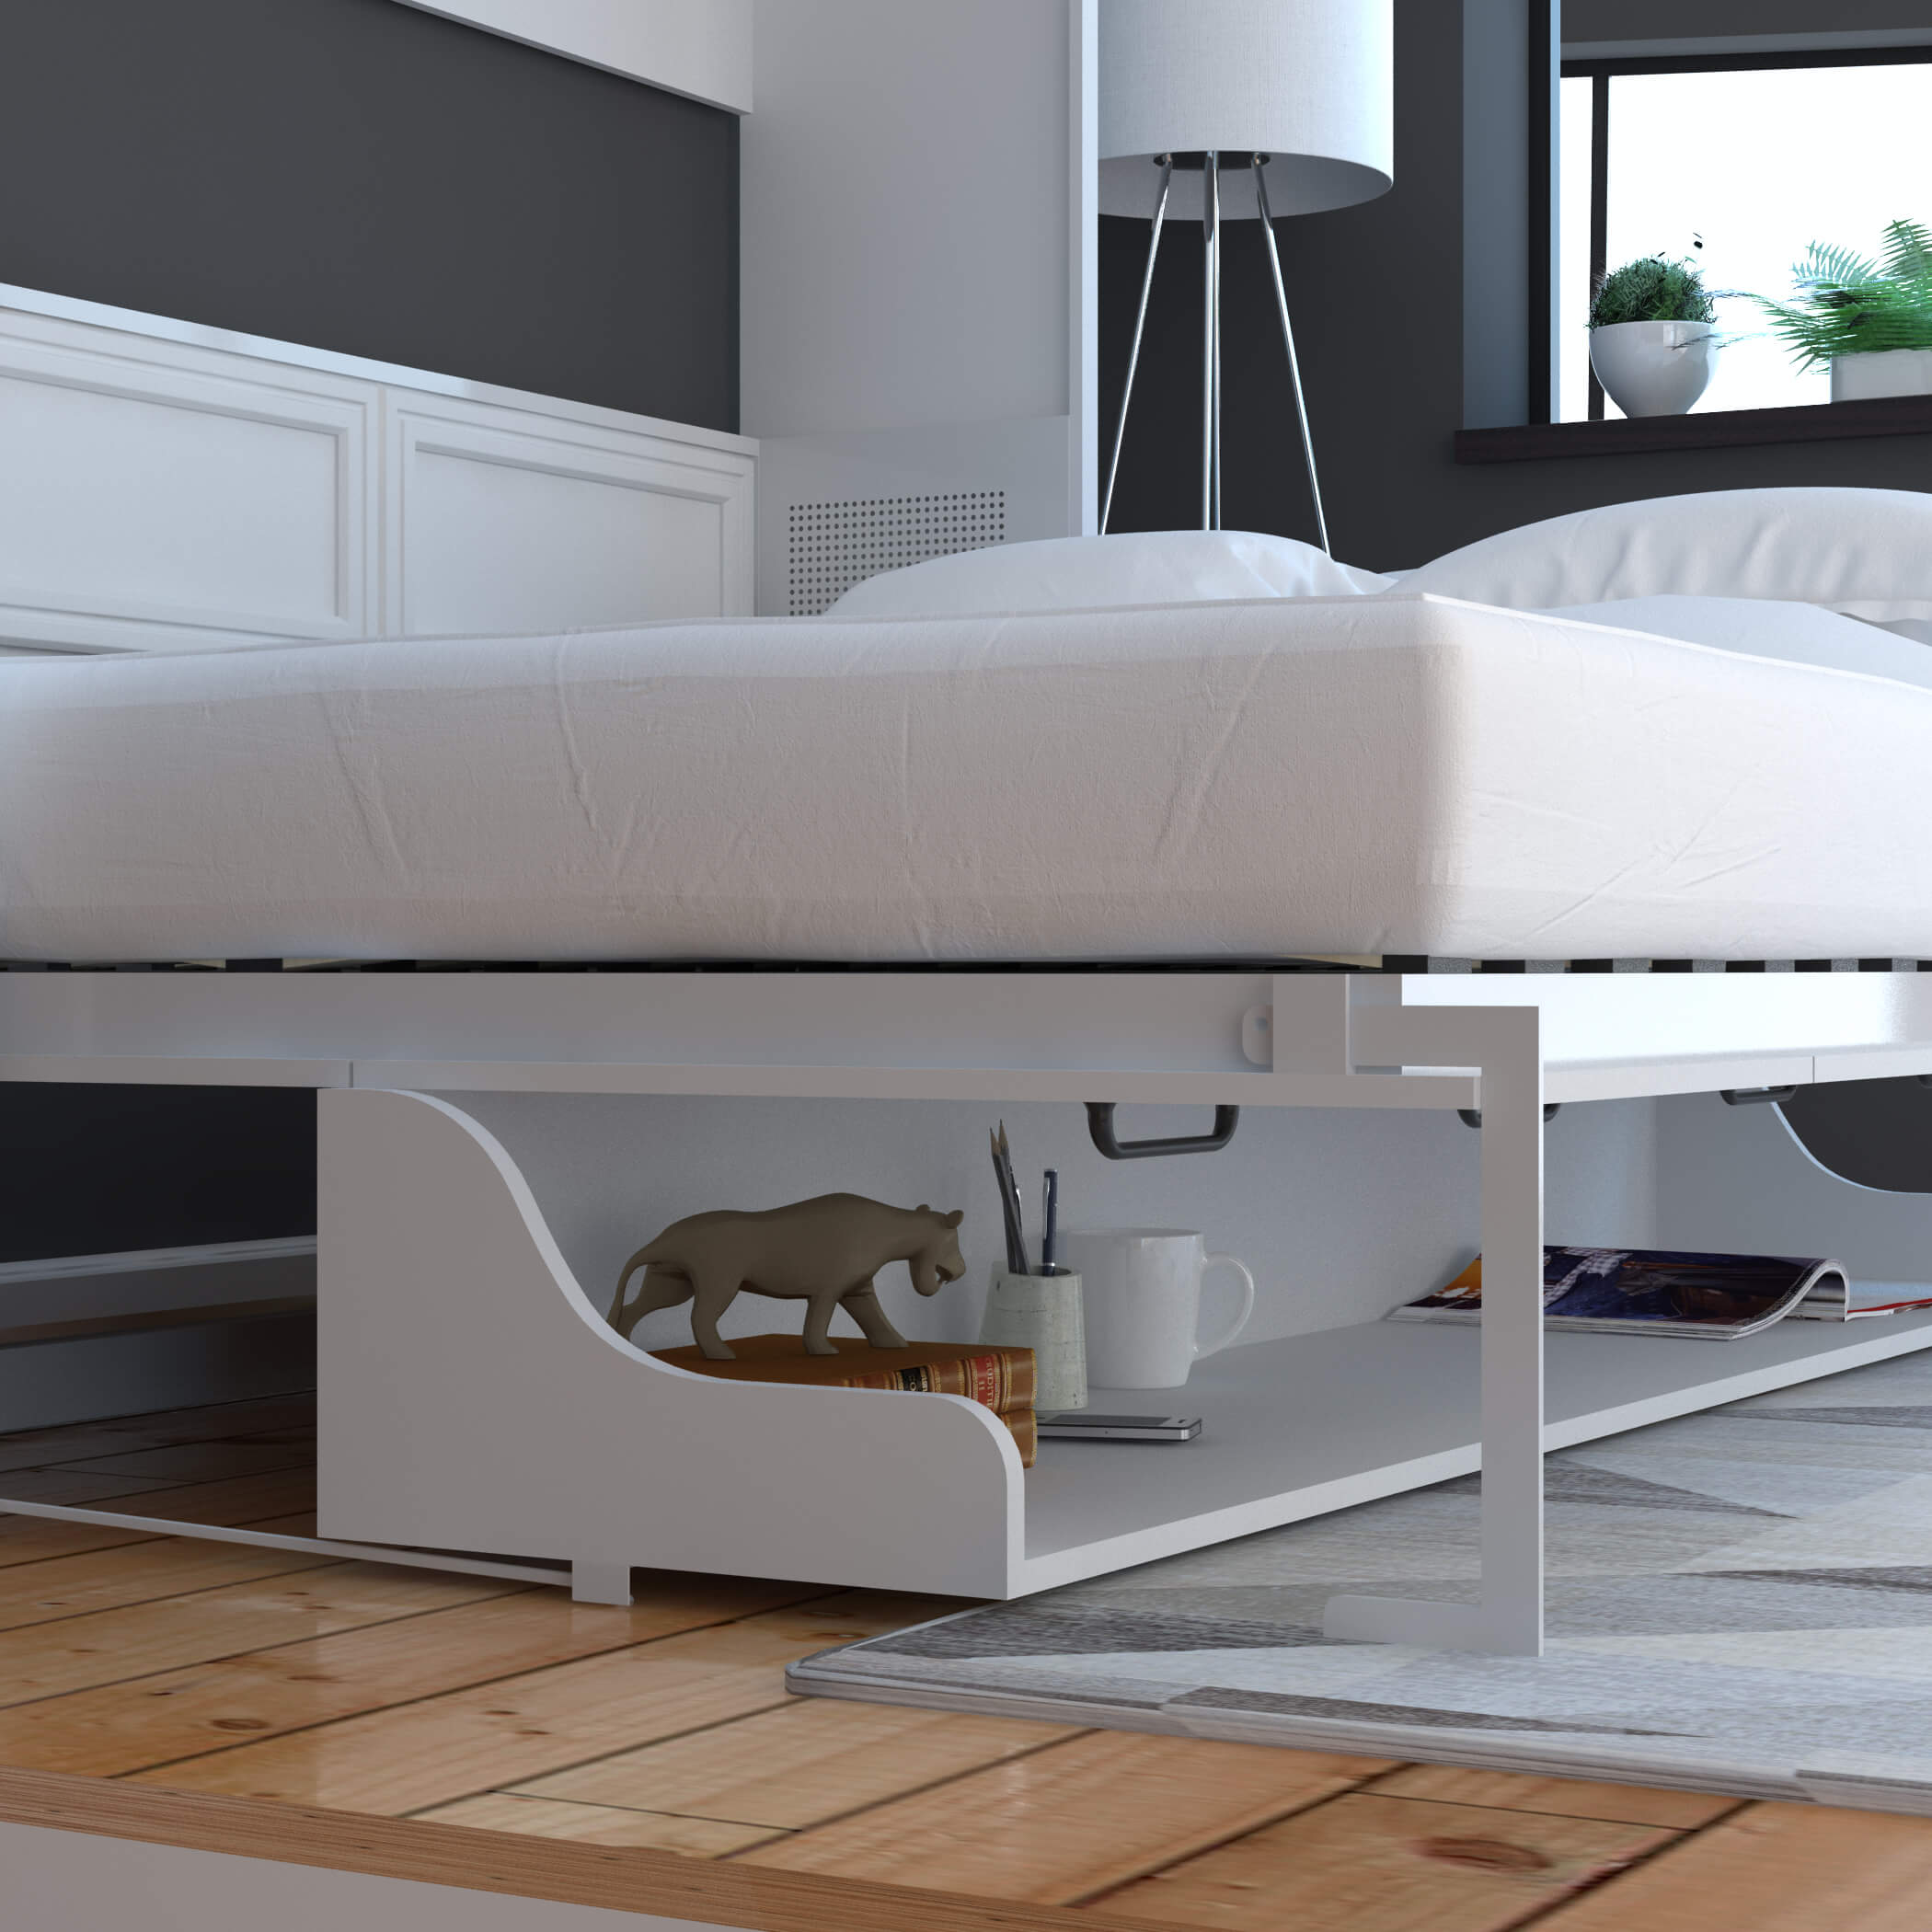 Adonis Horizontal Murphy Bed With Desk, Twin Murphy Bed Desk Combination